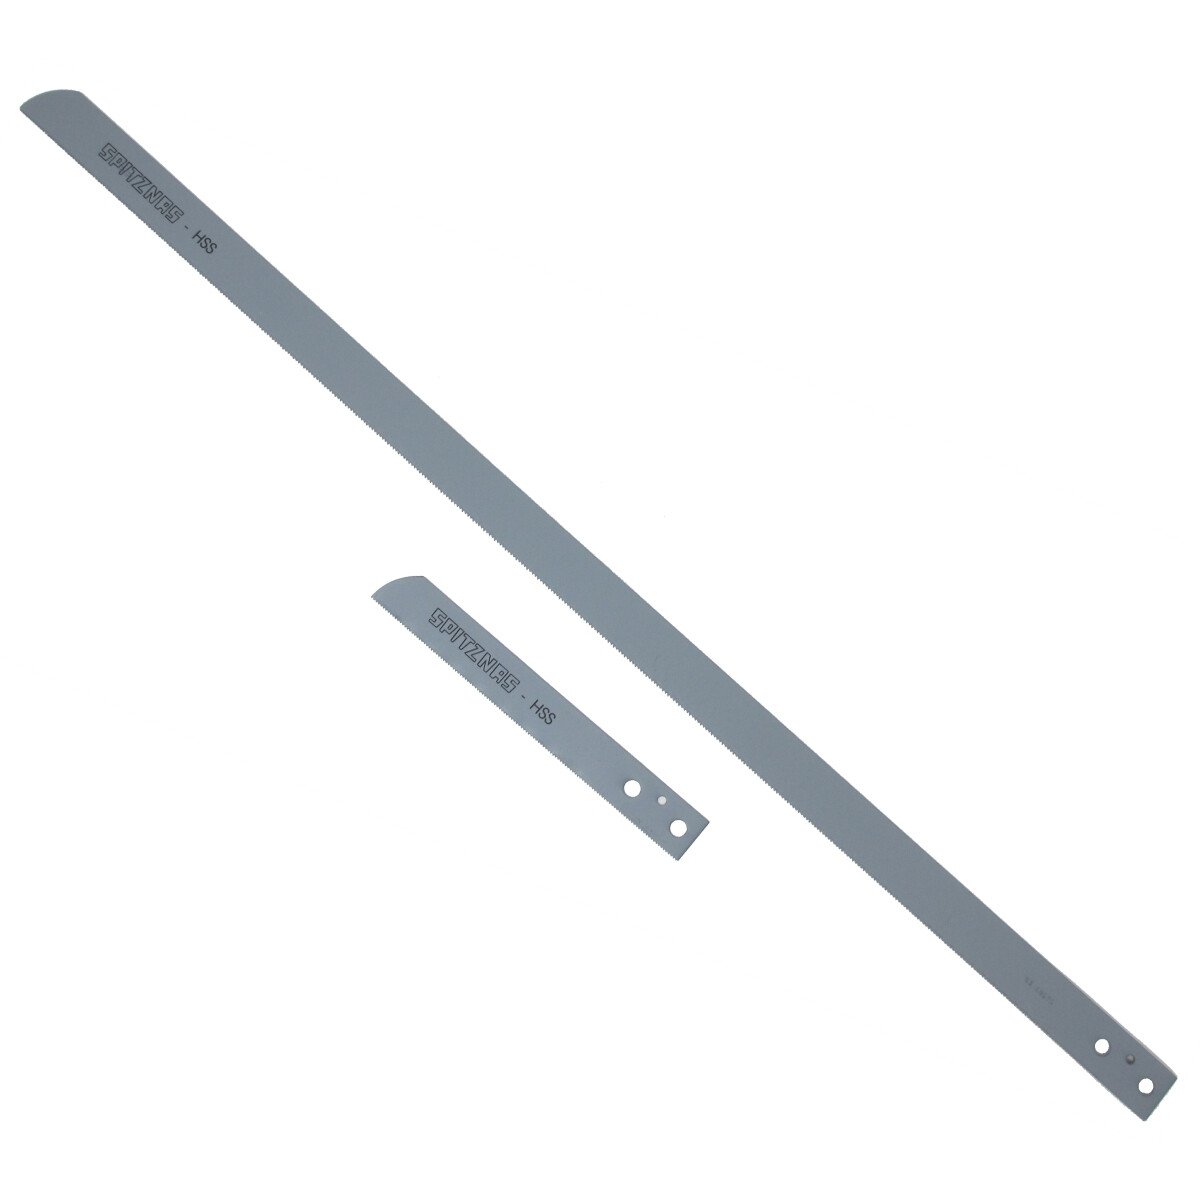 Spitznas 925010300 770mm (31") x 14tpi HSS Reciprocating Saw Blade